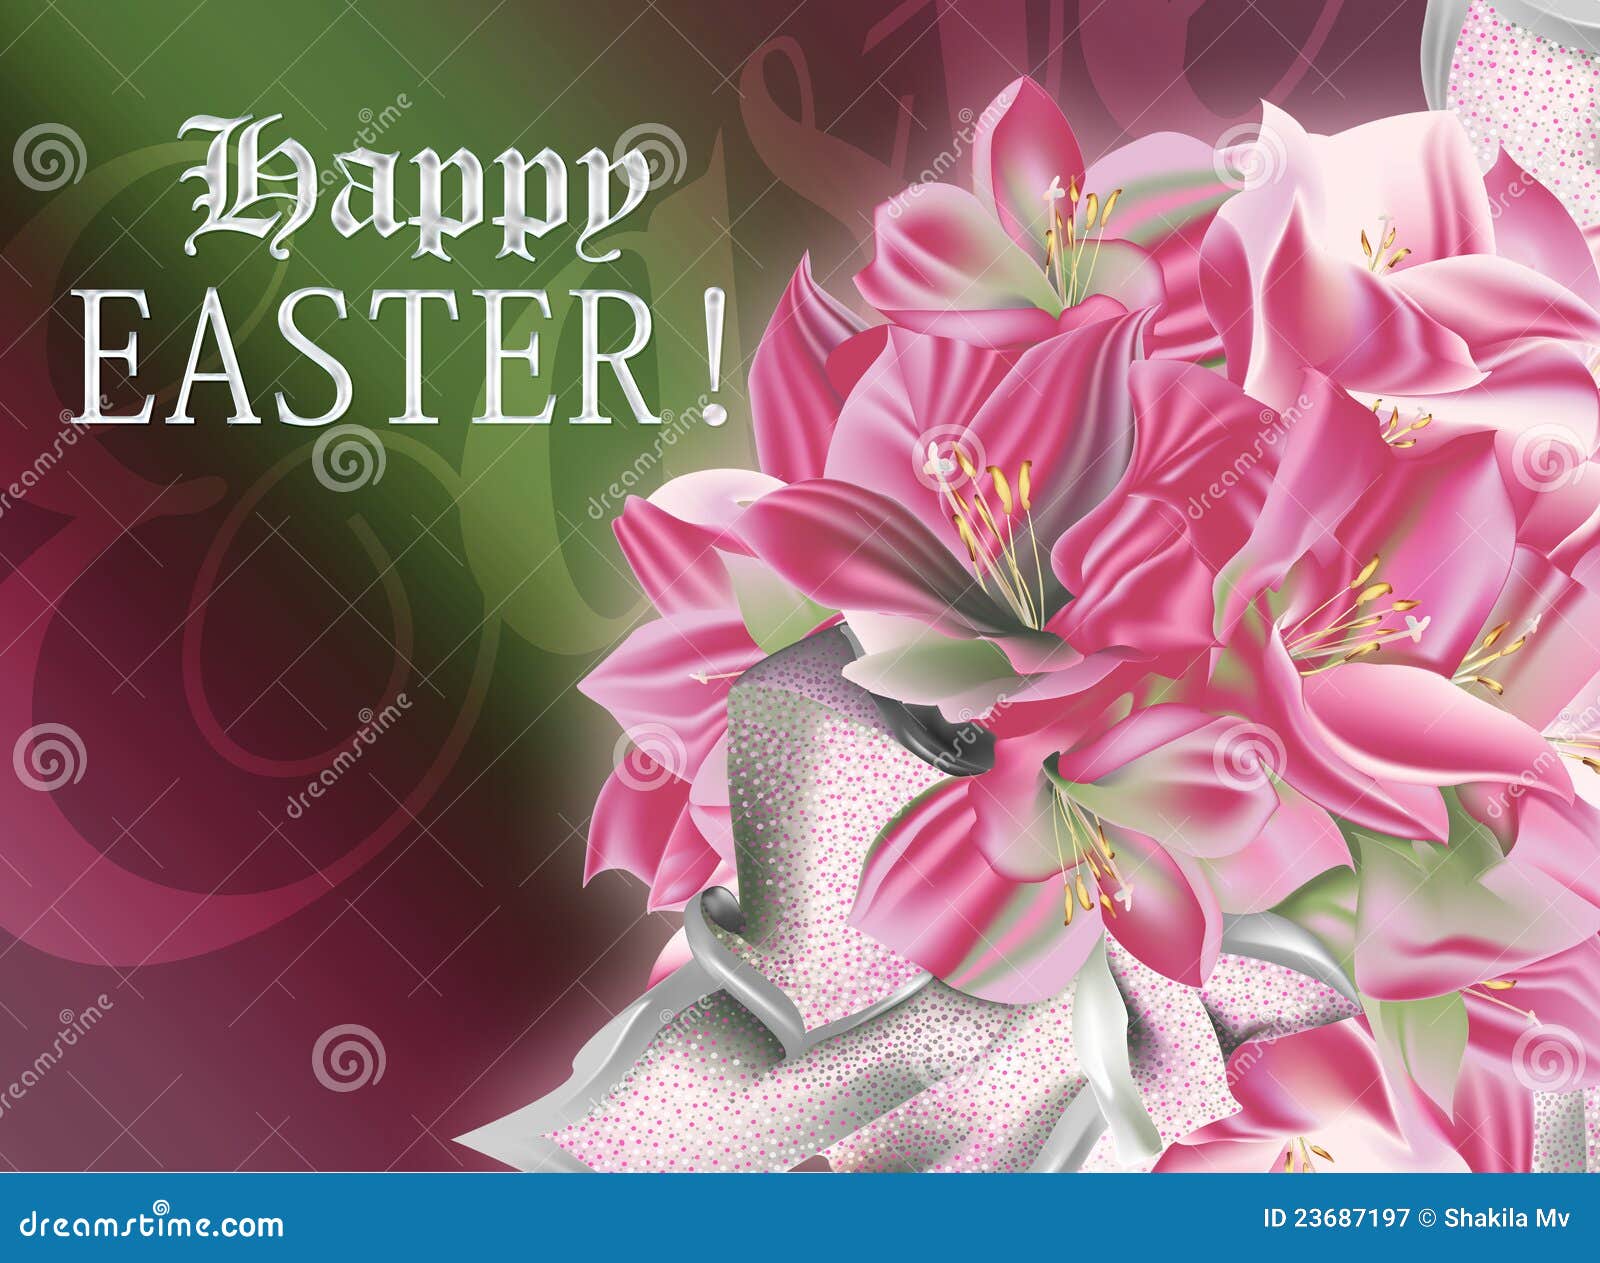 Easter greeting flowers stock illustration. Illustration of ...